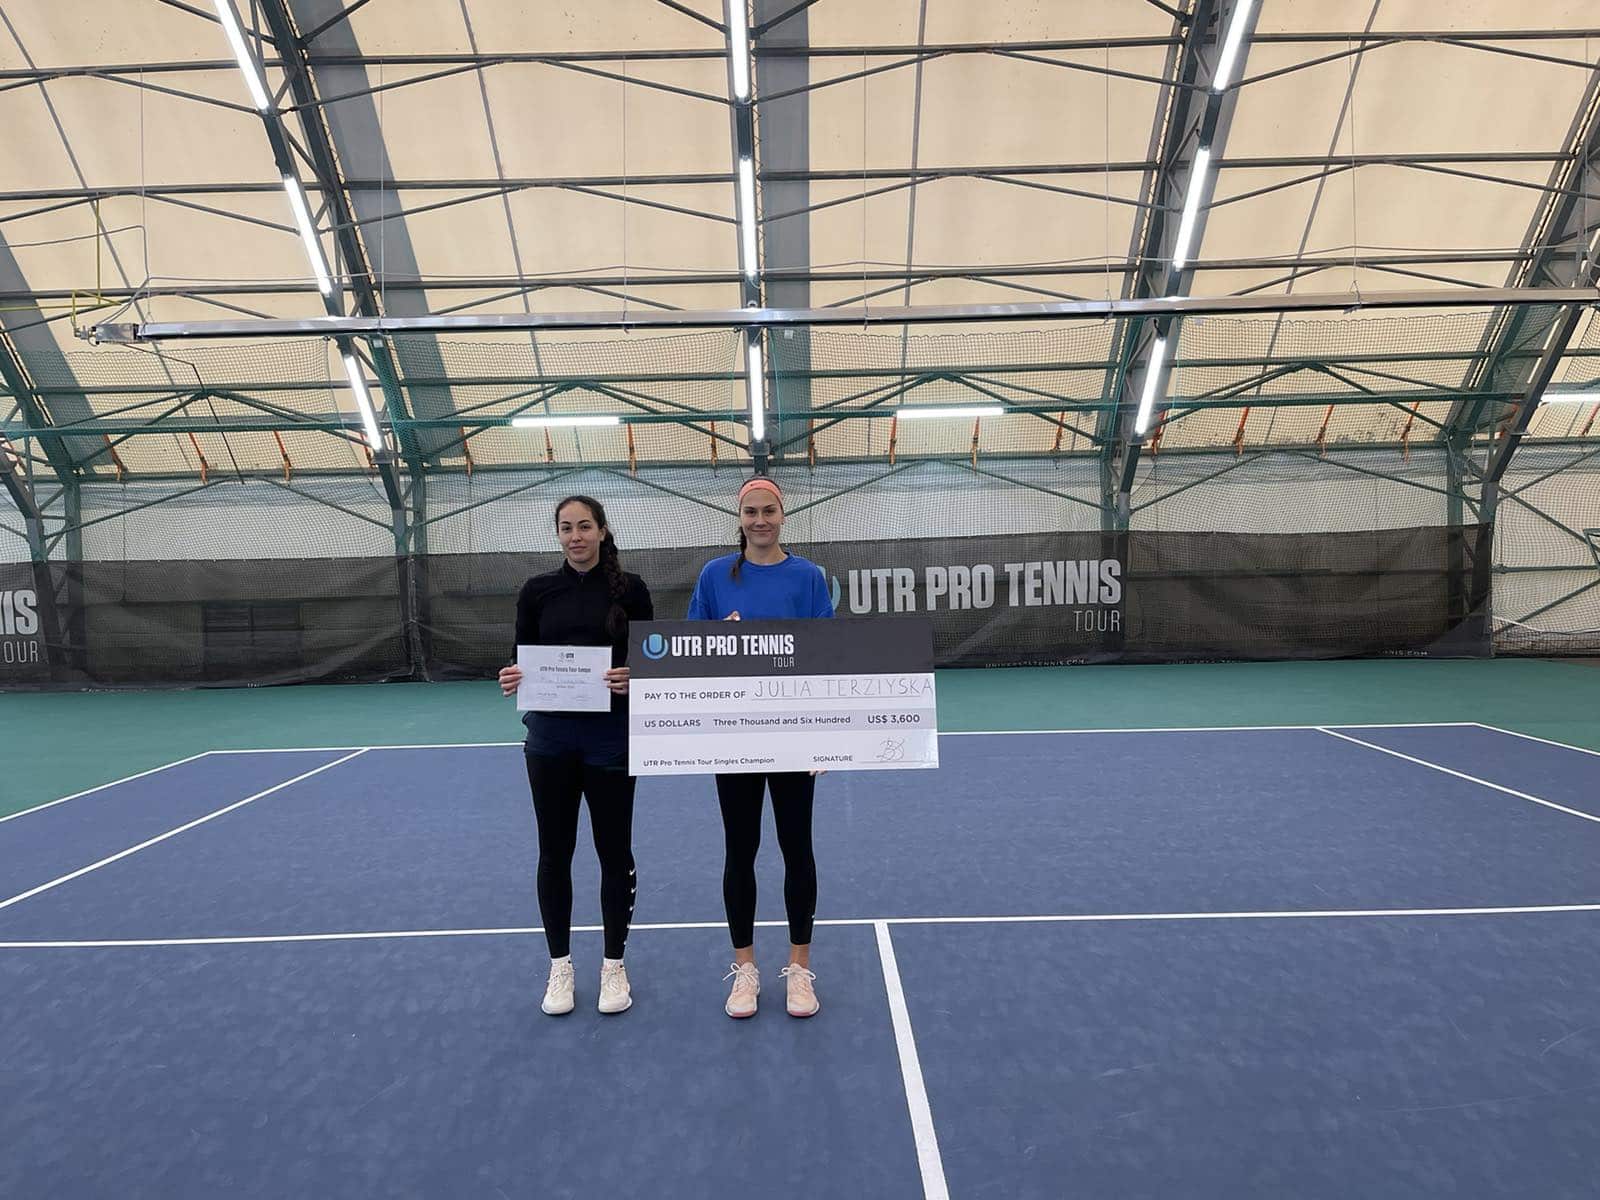 Джулия Терзийска завоюва втора поредна титла на UTR тенис турнир